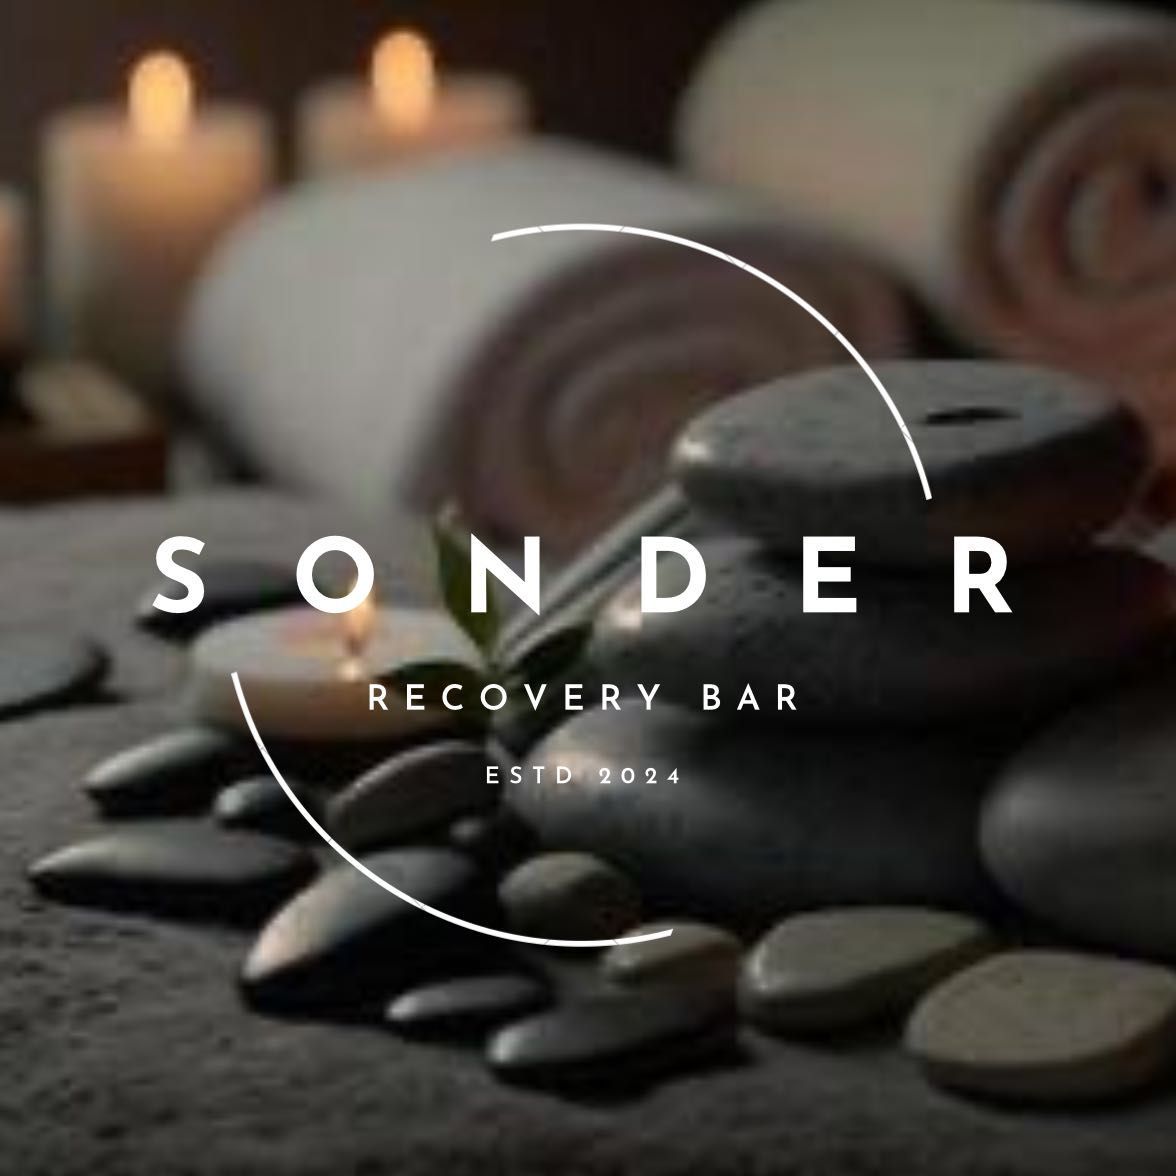 Sonder Recovery Bar, 789 Douglas Ave, 137, Altamonte Springs, 32714